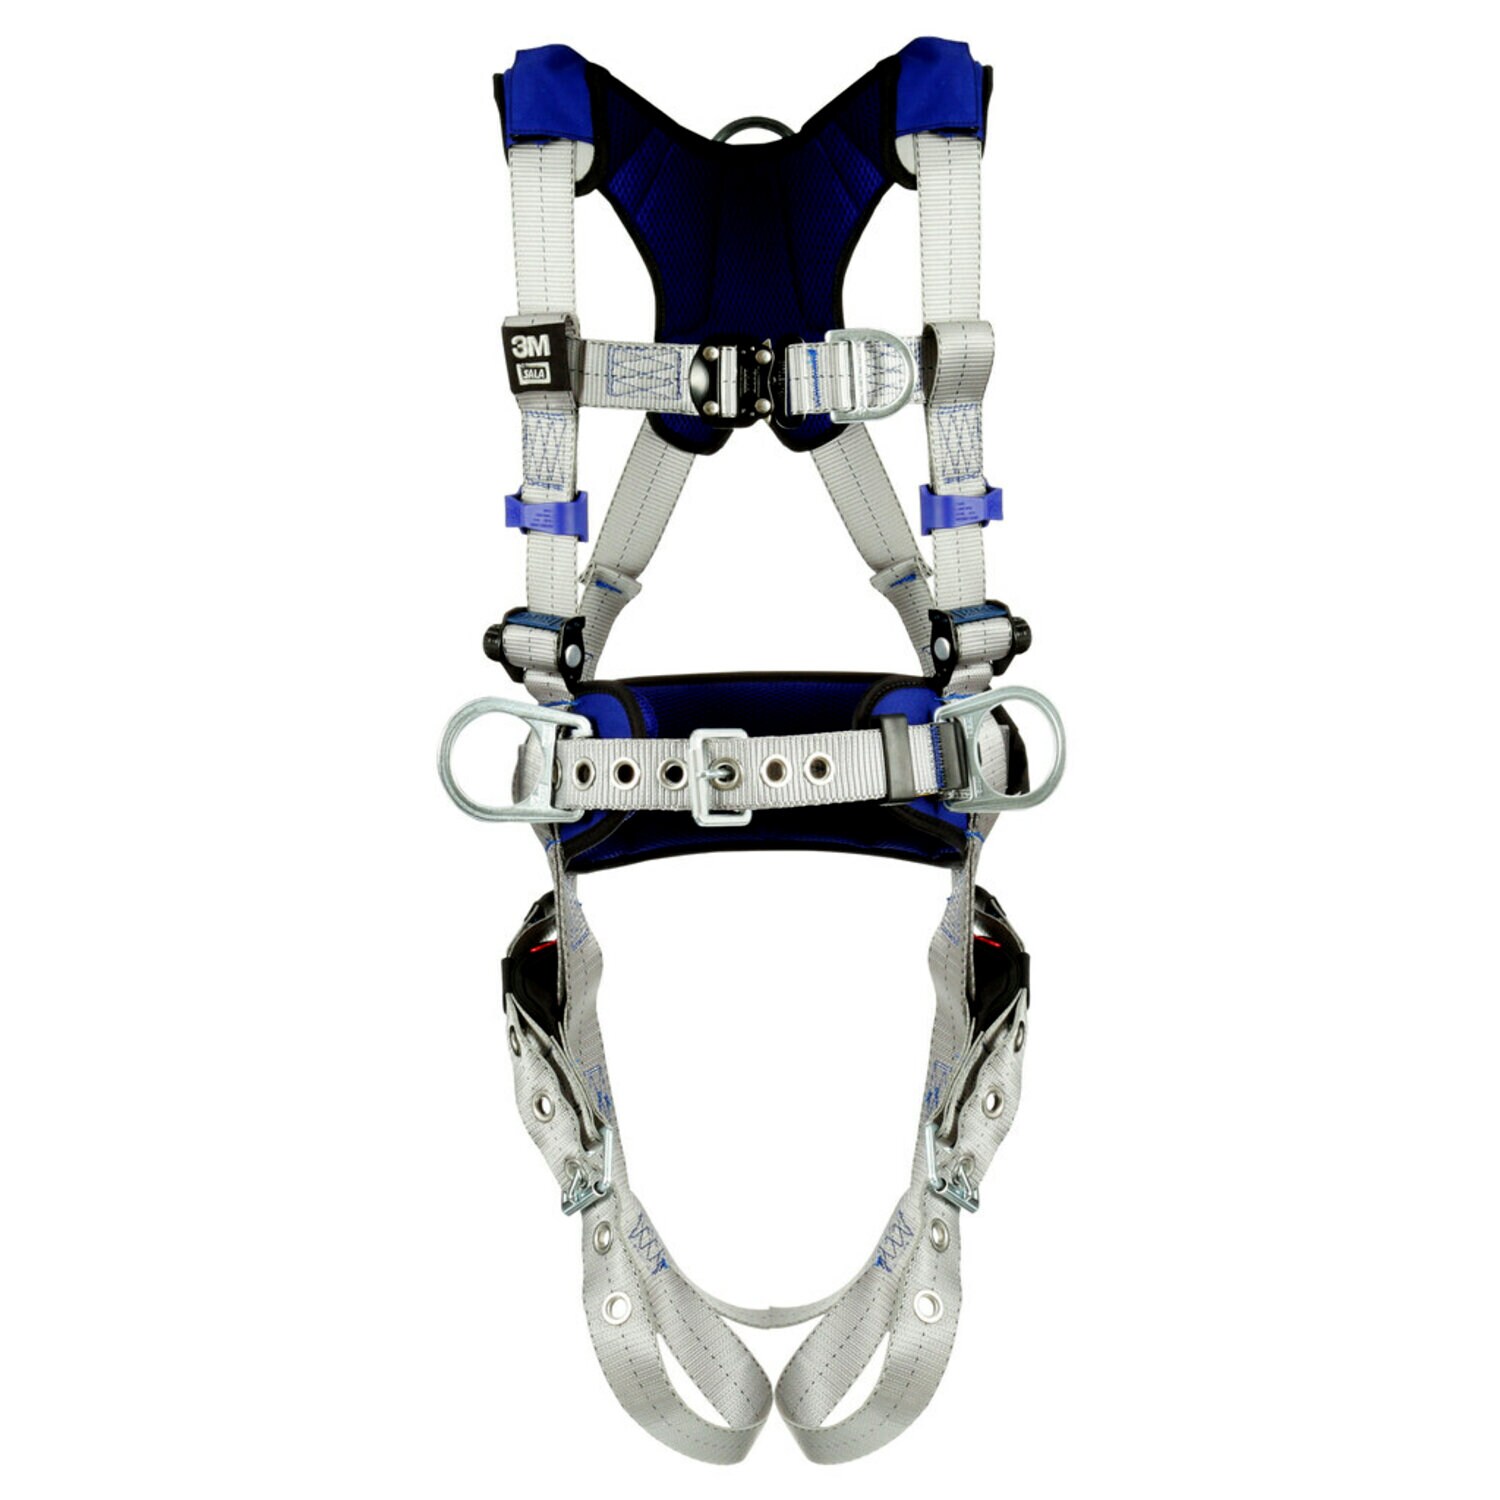 7012817614 - 3M DBI-SALA ExoFit X100 Comfort Construction Climbing/Positioning Safety Harness 1401136, Medium